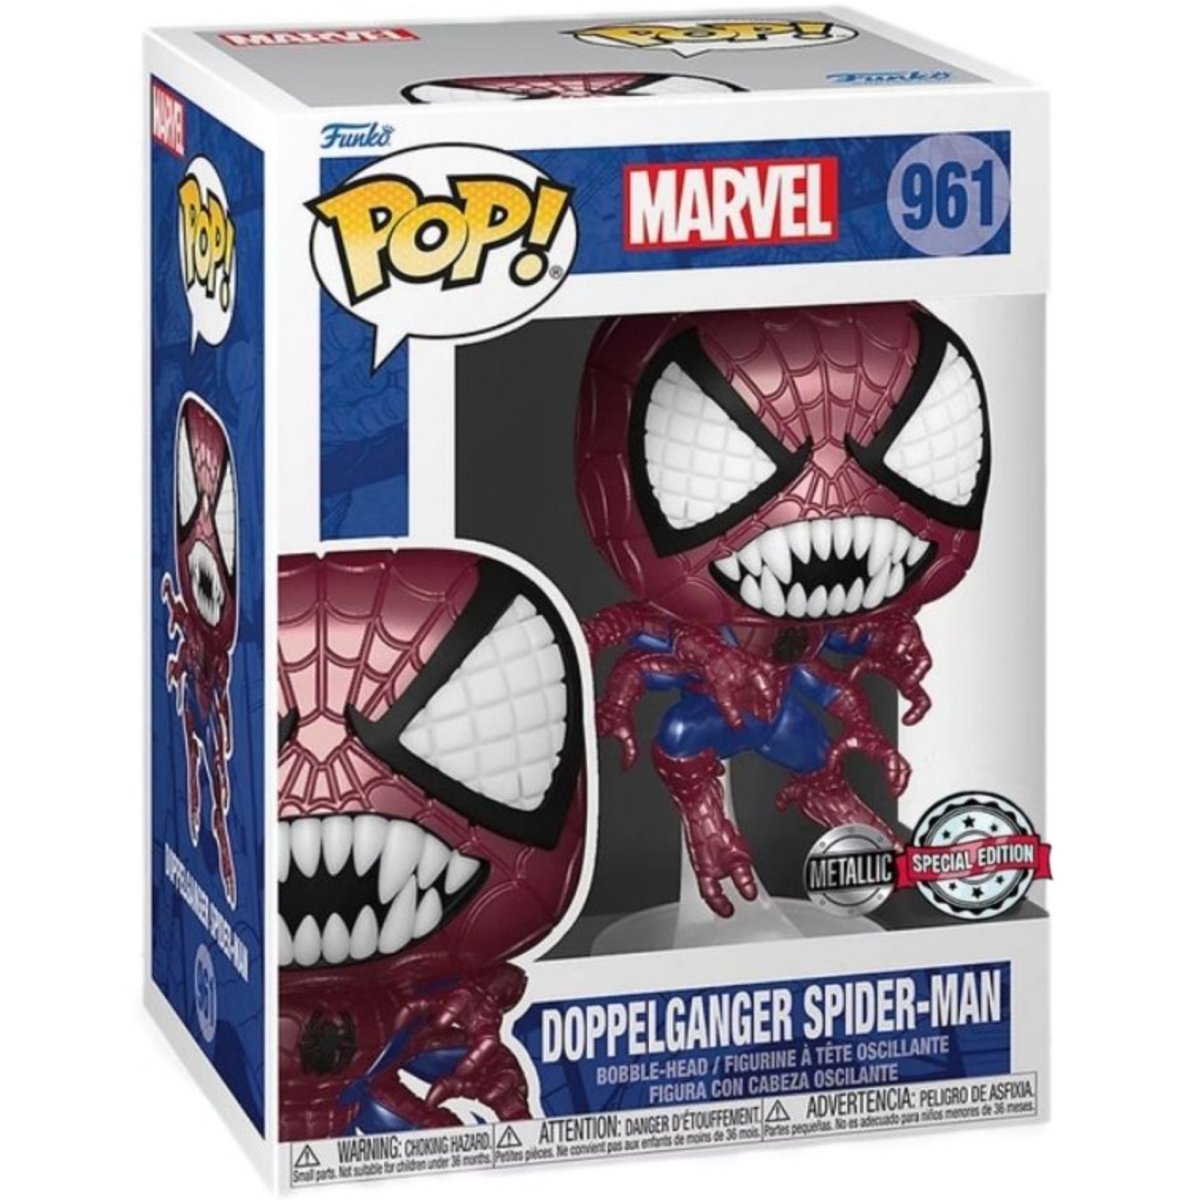 Marvel - Doppelganger Spider-Man (Metallic Special Edition) #961 - Funko Pop! Vinyl Marvel - Persona Toys